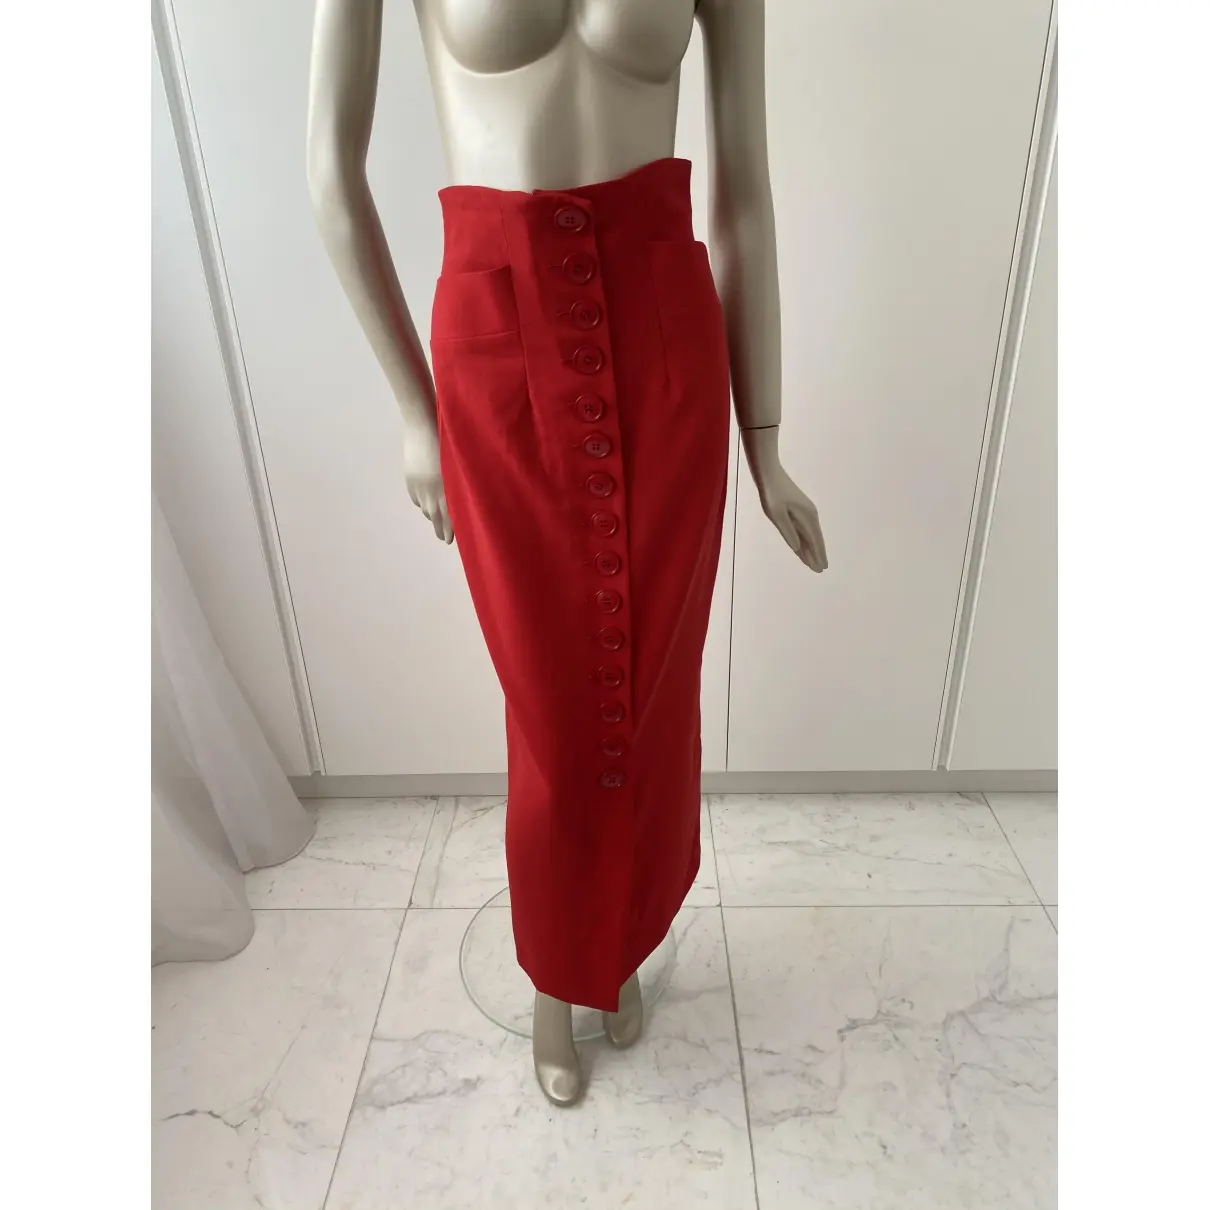 Buy Gianfranco Ferré Wool maxi skirt online